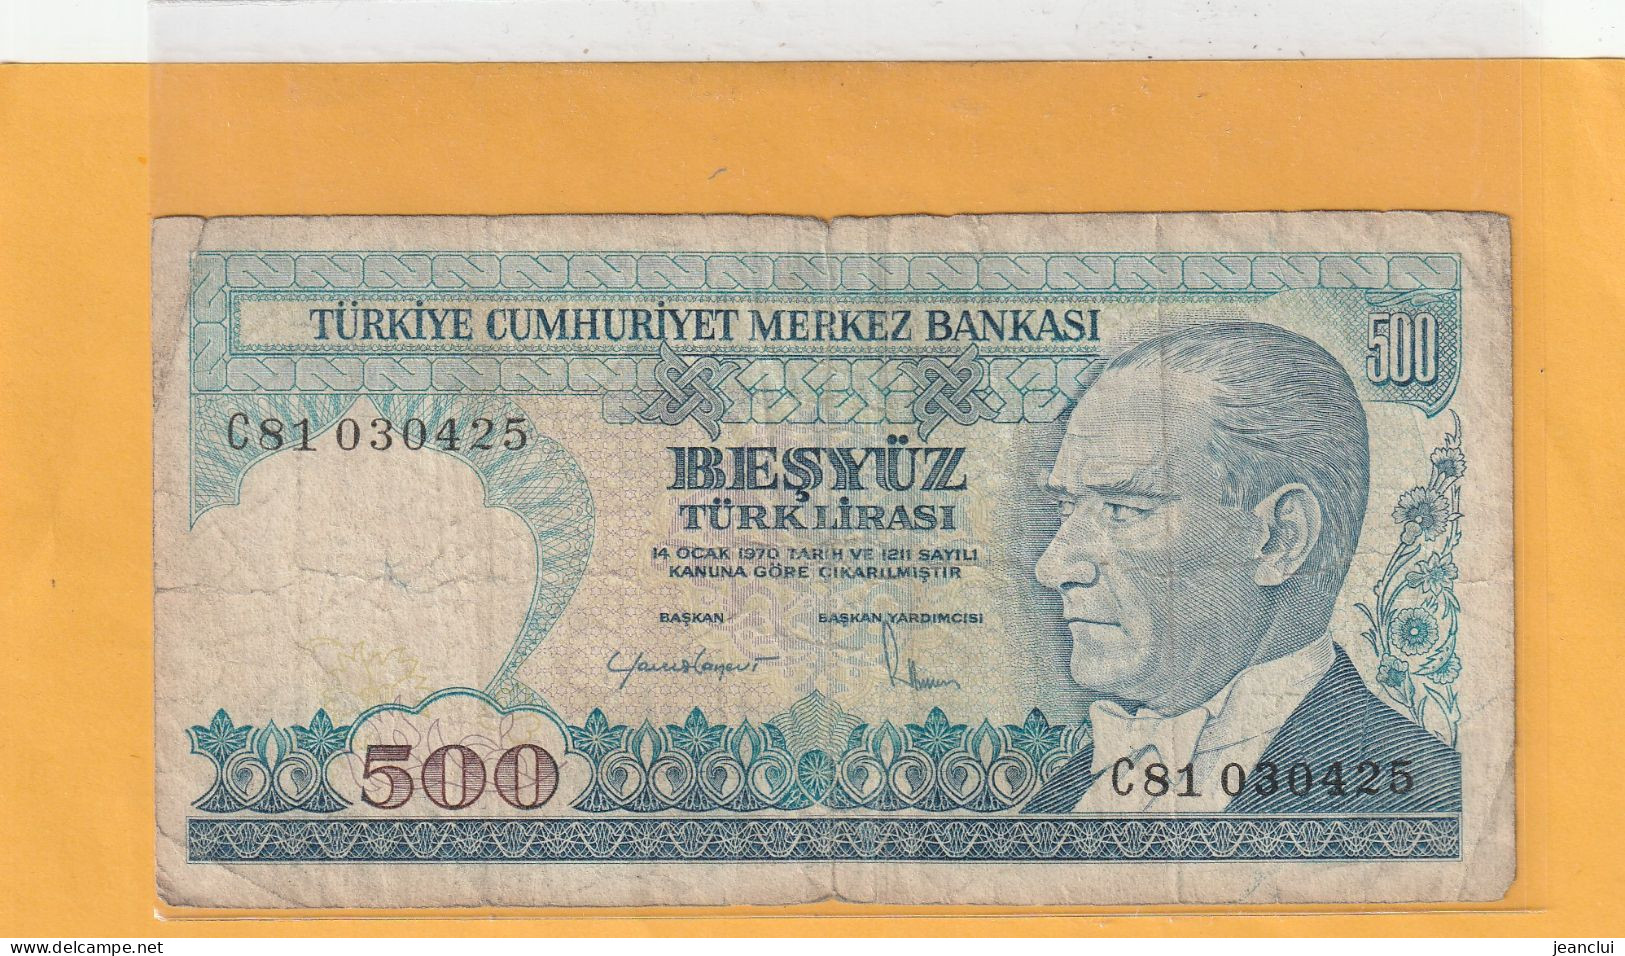 TURKIYE CUMHURIYET MERKEZ BANKASI . 500 LIRA . 14 OCAK 1970  . N°  C81 030425 .  2 SCANNES  .  BILLET USITE - Turquie